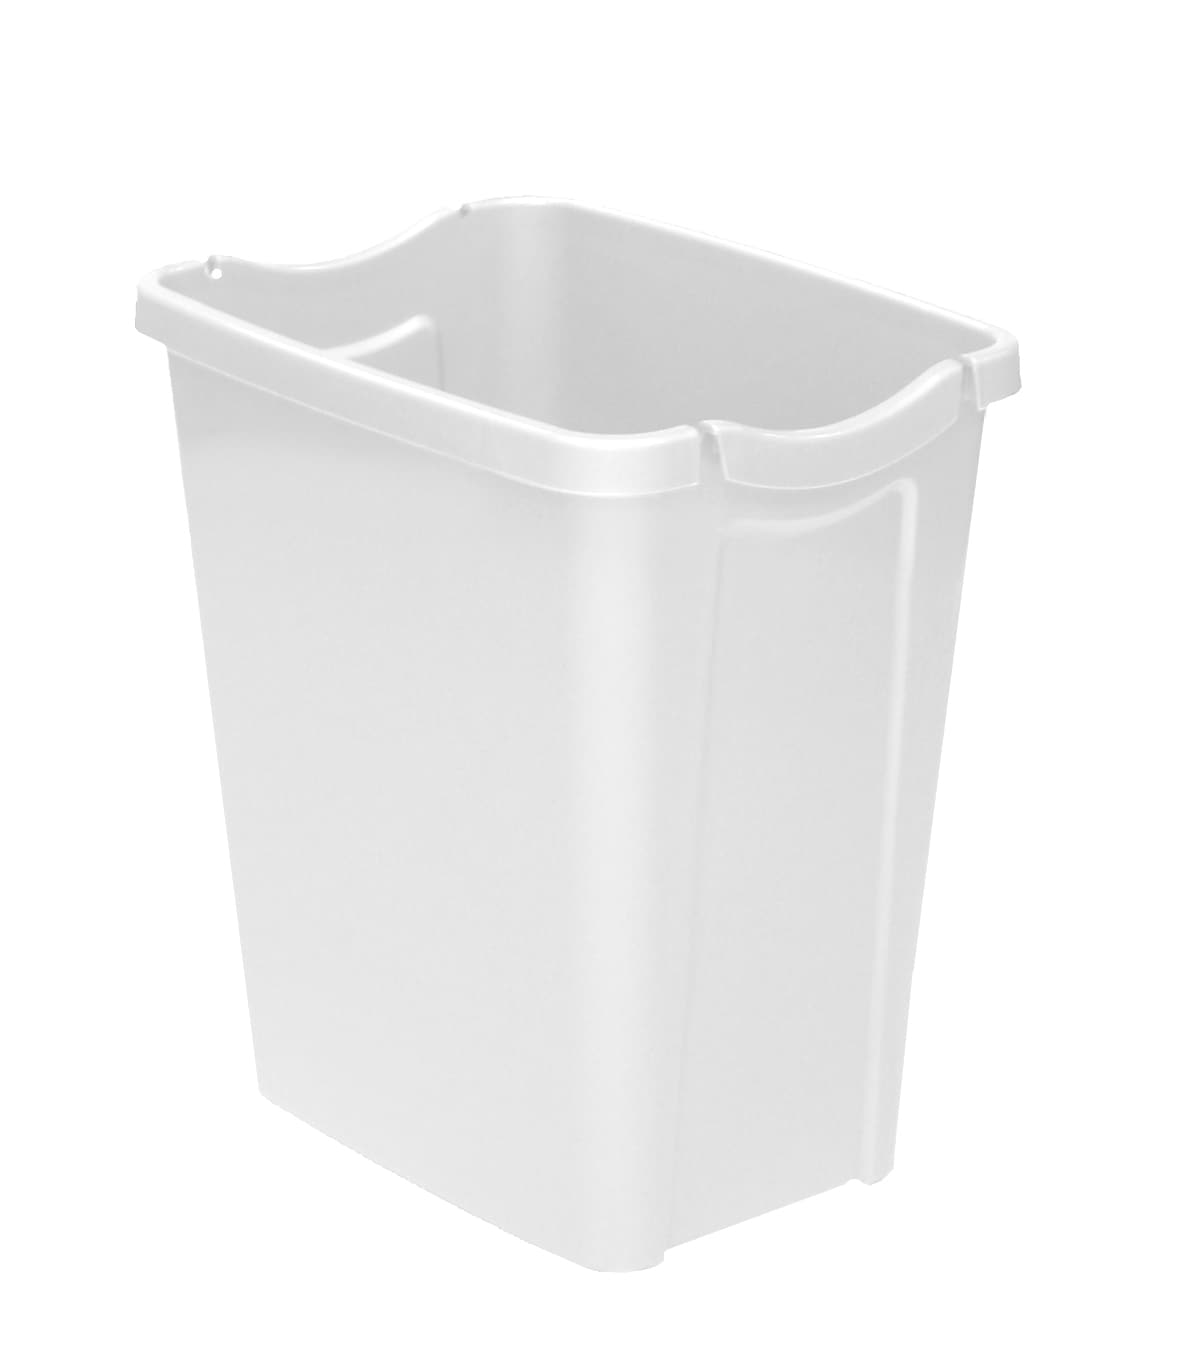 Hefty White Plastic Wastebasket in the Wastebaskets department at